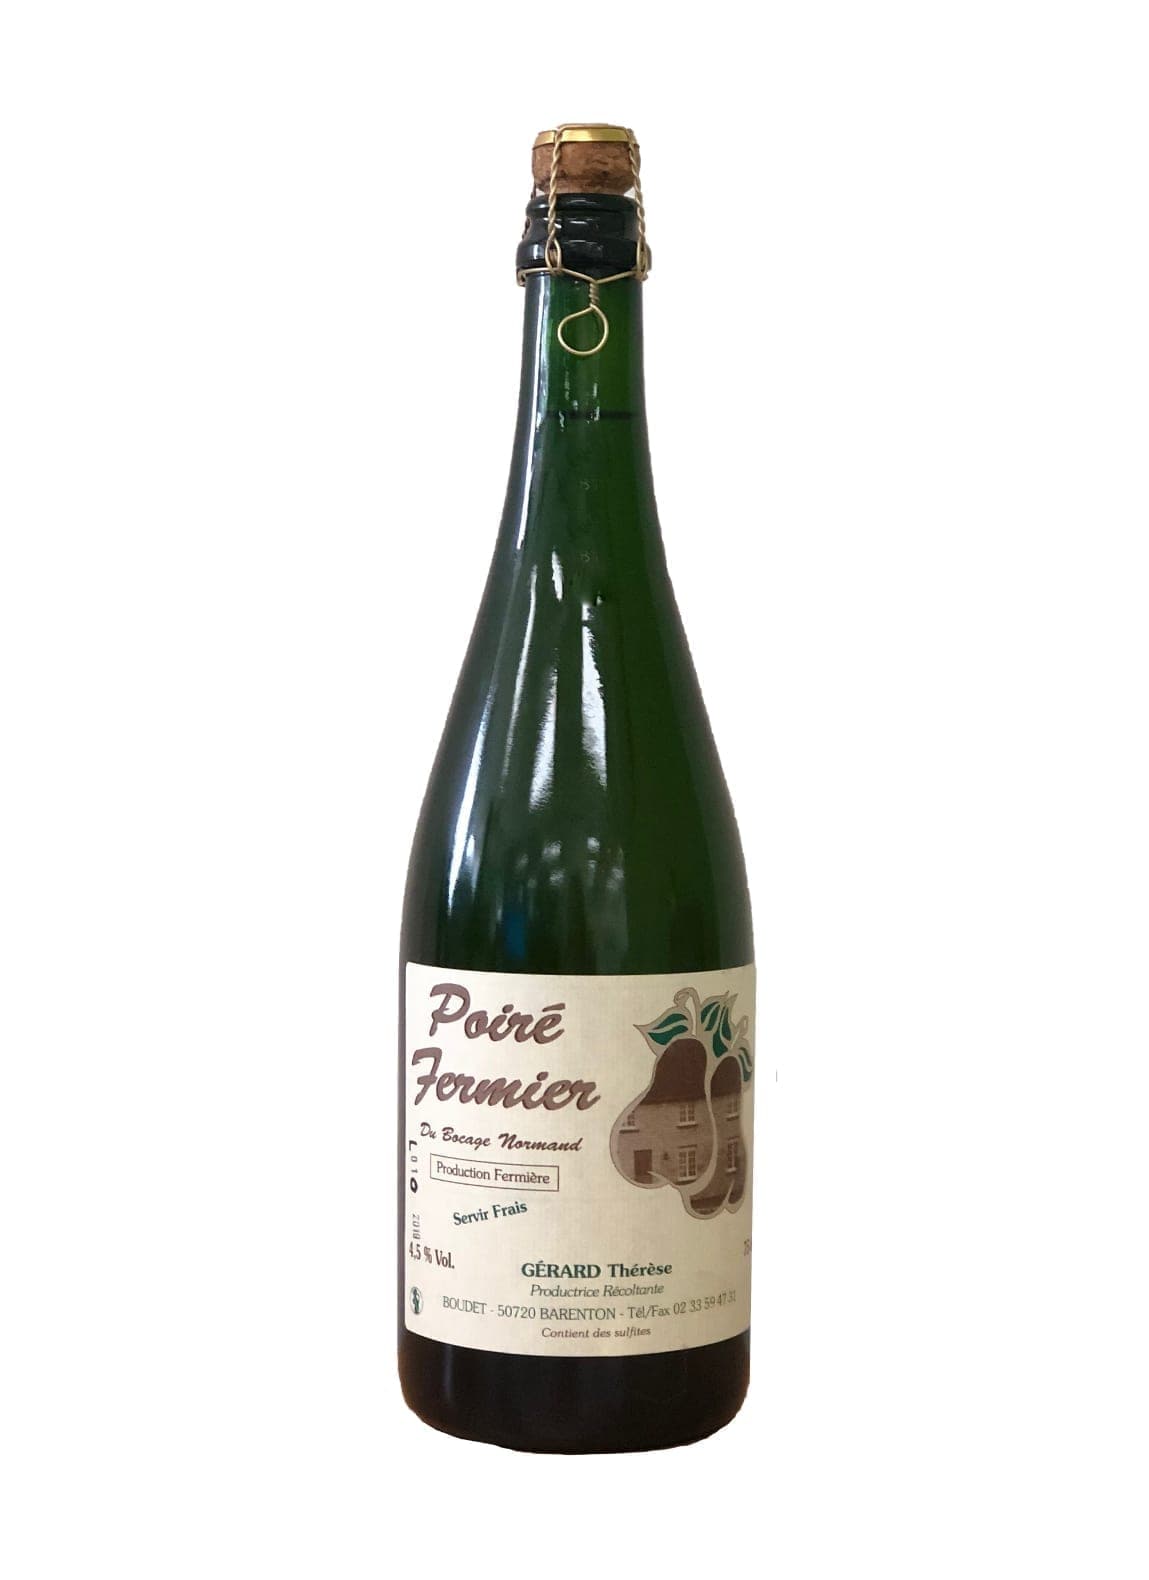 Gerard Therese Boudet Cider AOC Domfrontais Cidre Poire Fermier (Pear Cider) 4.5% 750ml | Hard Cider | Shop online at Spirits of France